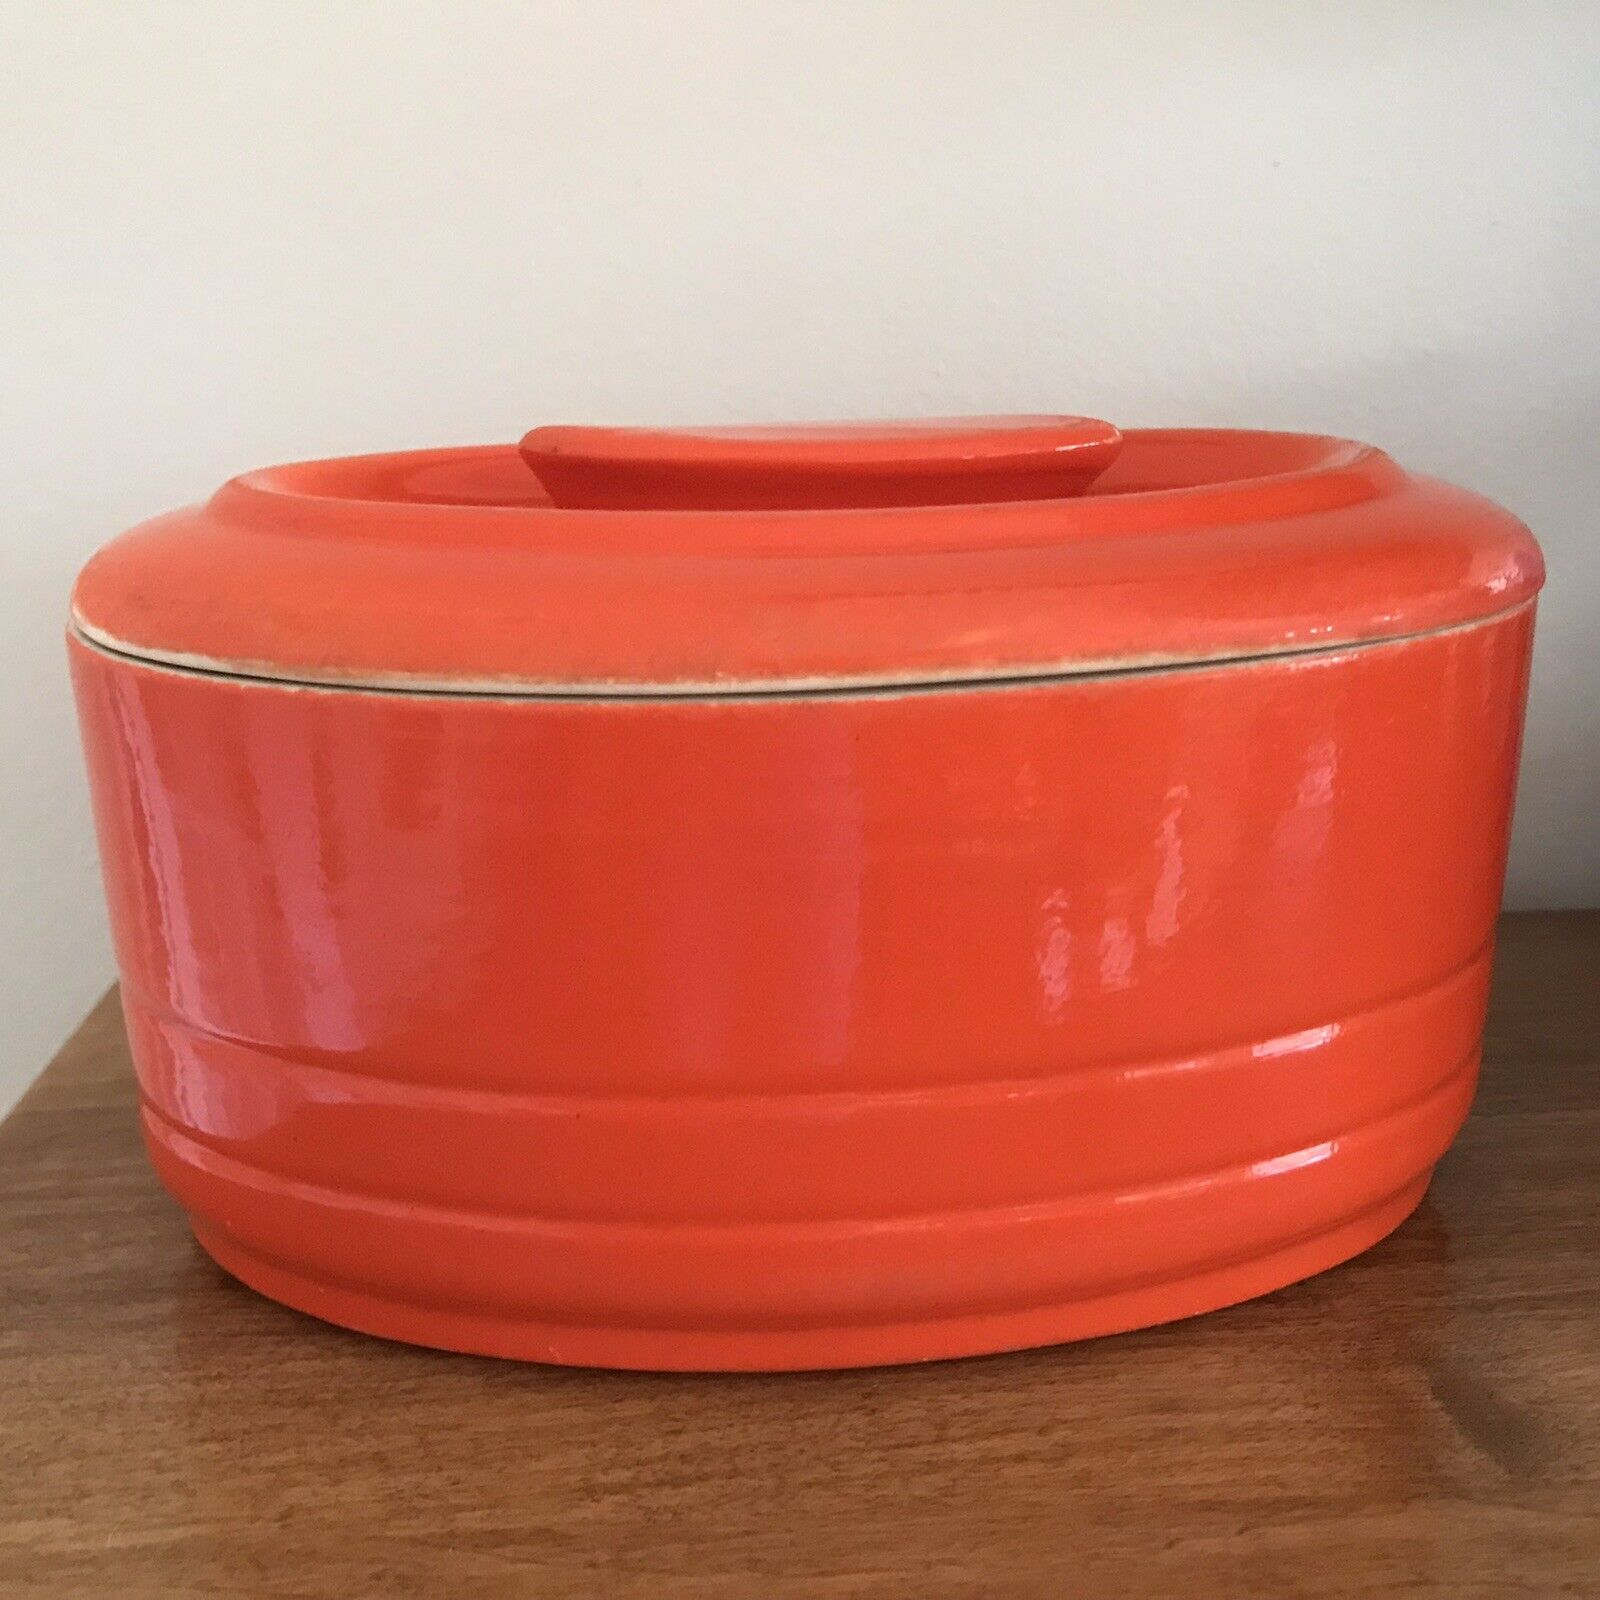 Hall China Co. for Westinghouse Orange Oval Refrigerator Dish Vintage